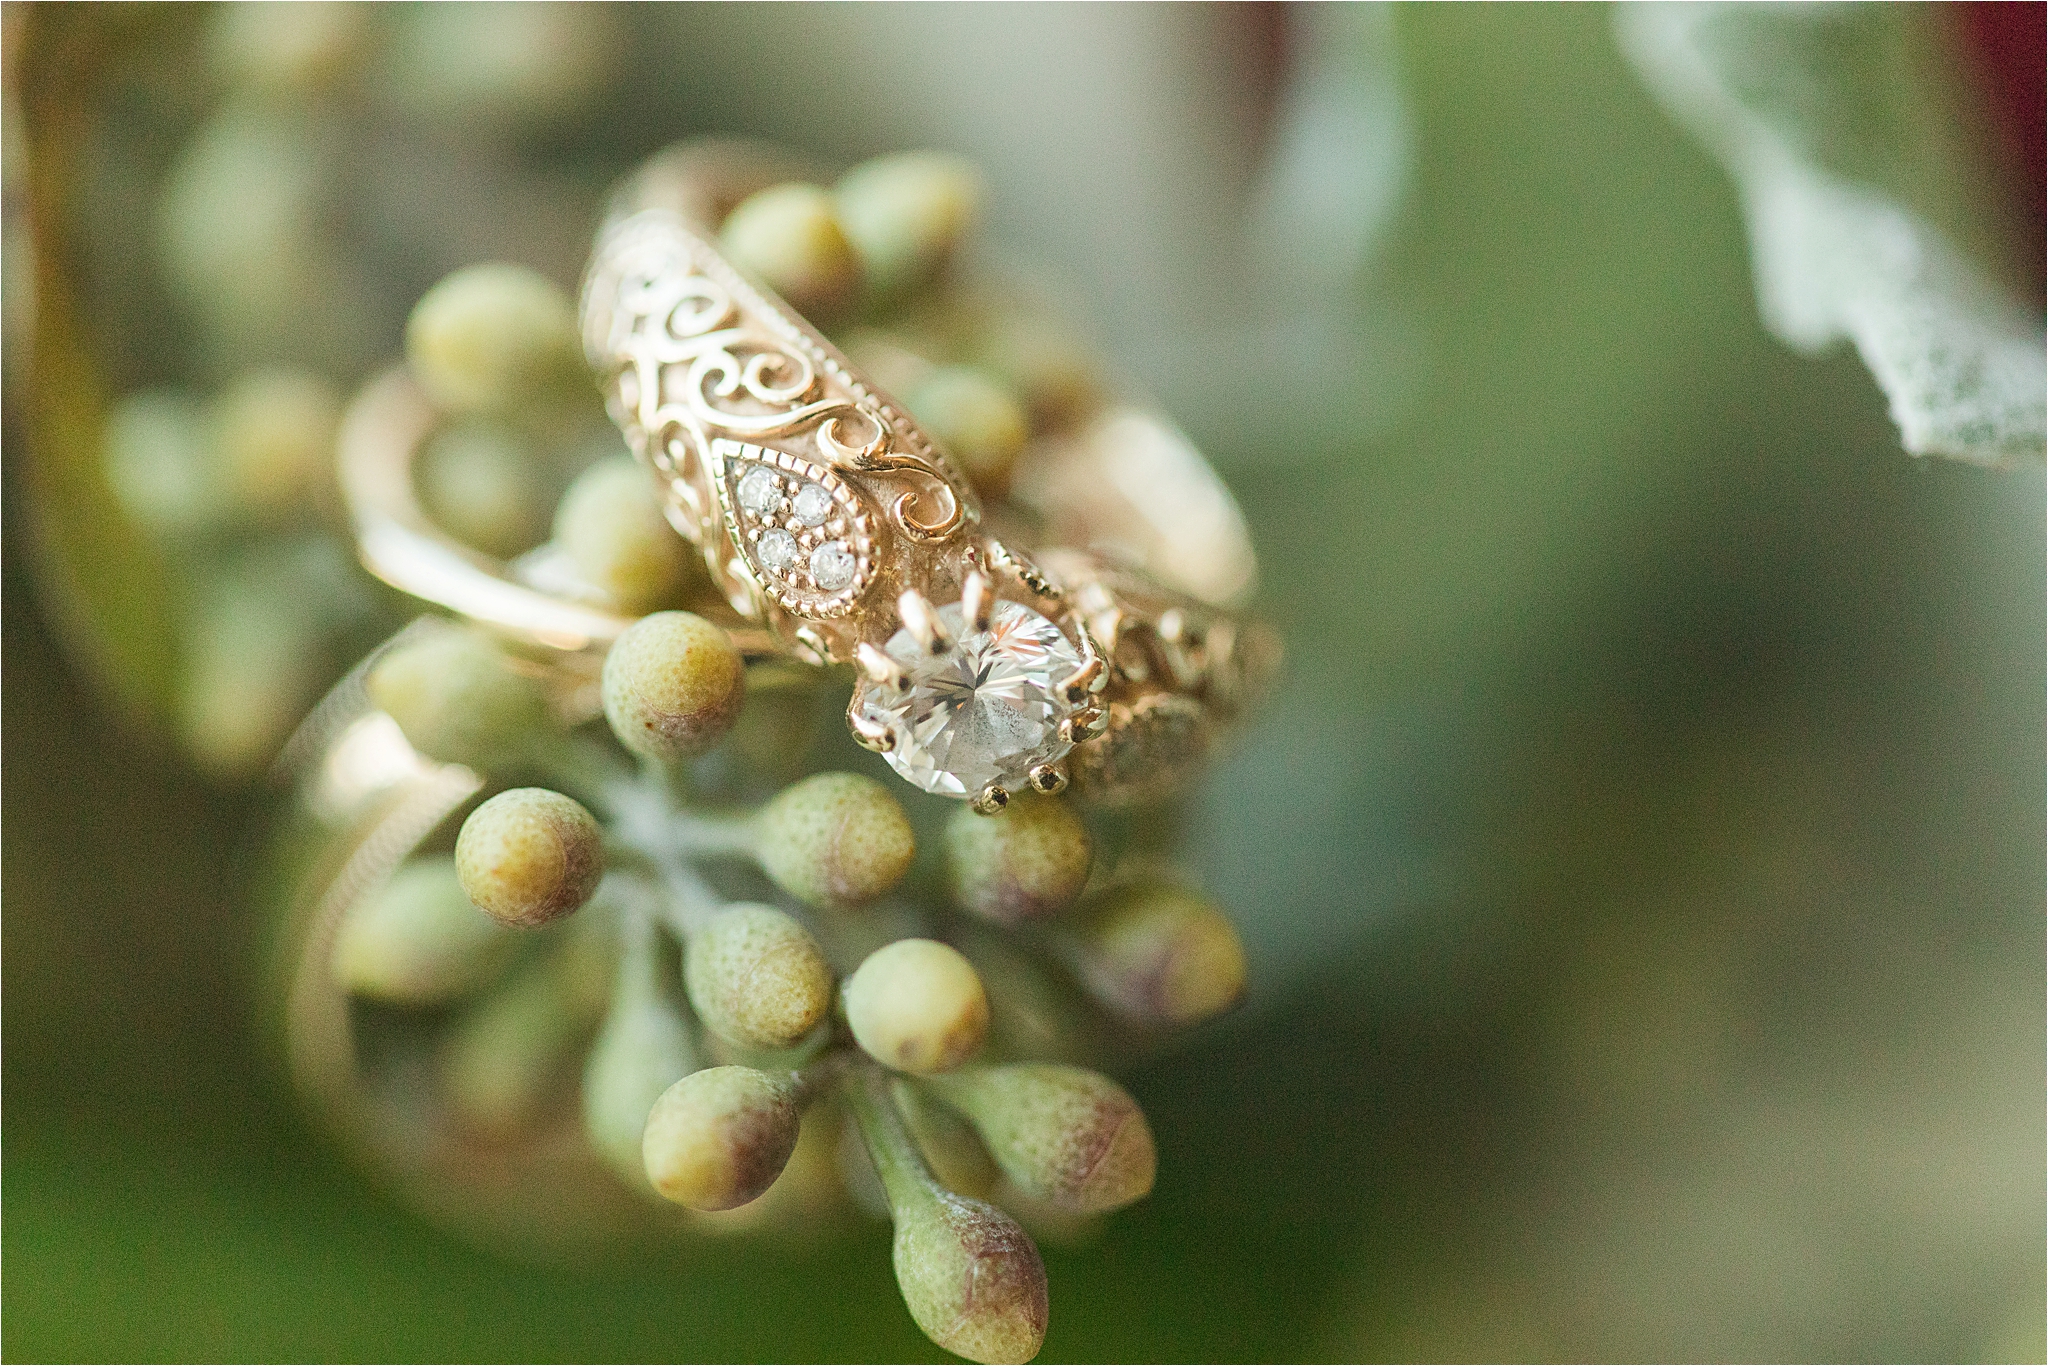 ornate-wedding-engagement-rings-yellow-gold-antique-unique-round-cut-diamond-vine-leaves